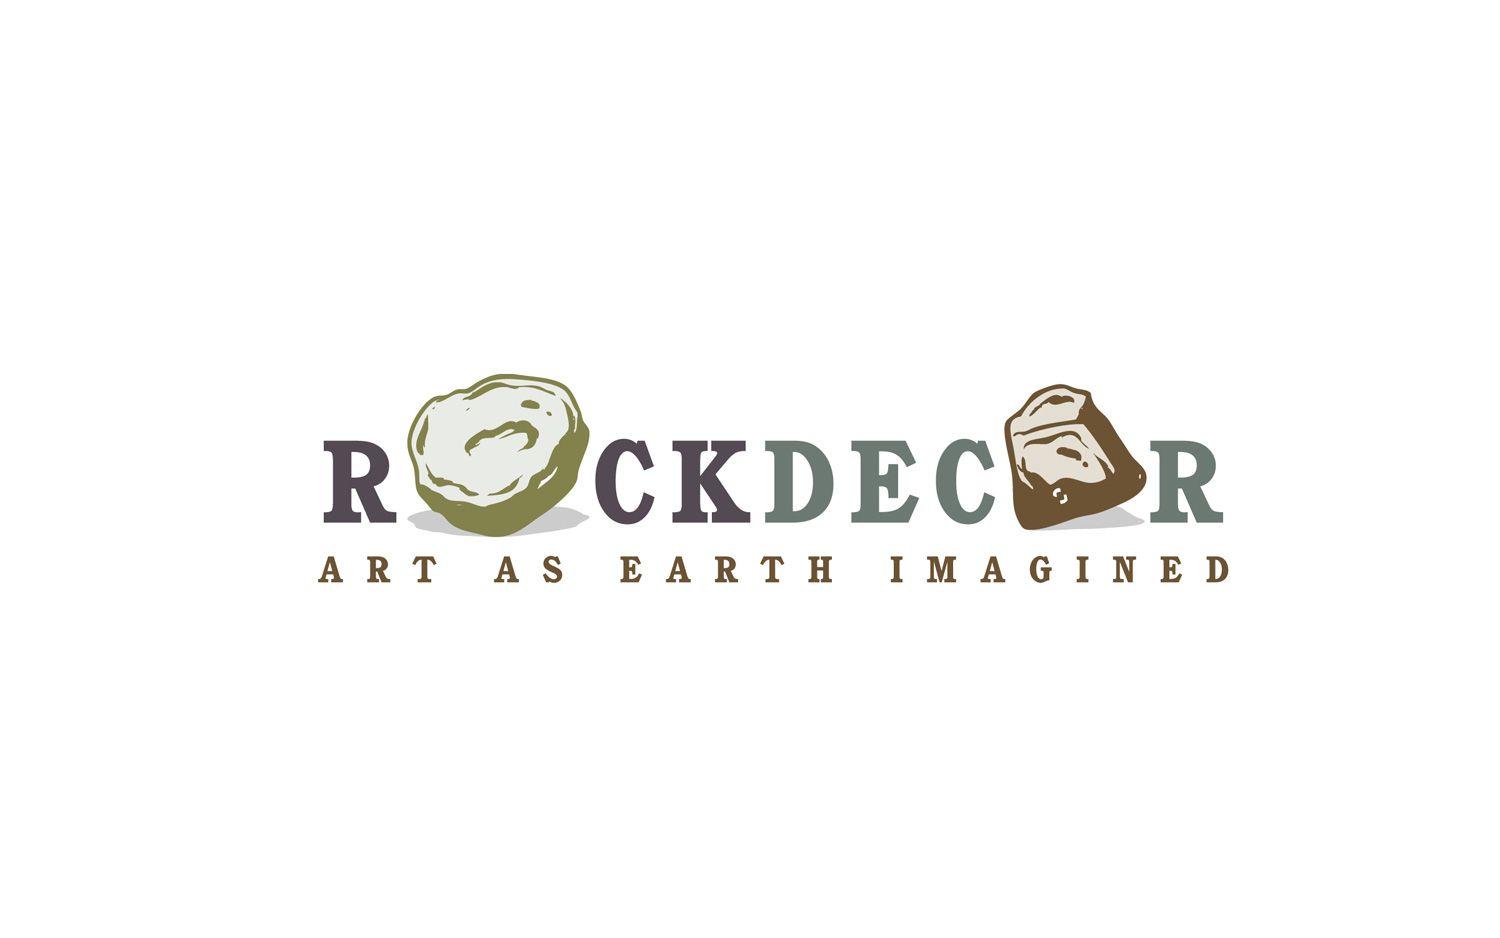 Rock Company Logo - Upmarket, Elegant, It Company Logo Design for Rock Decor